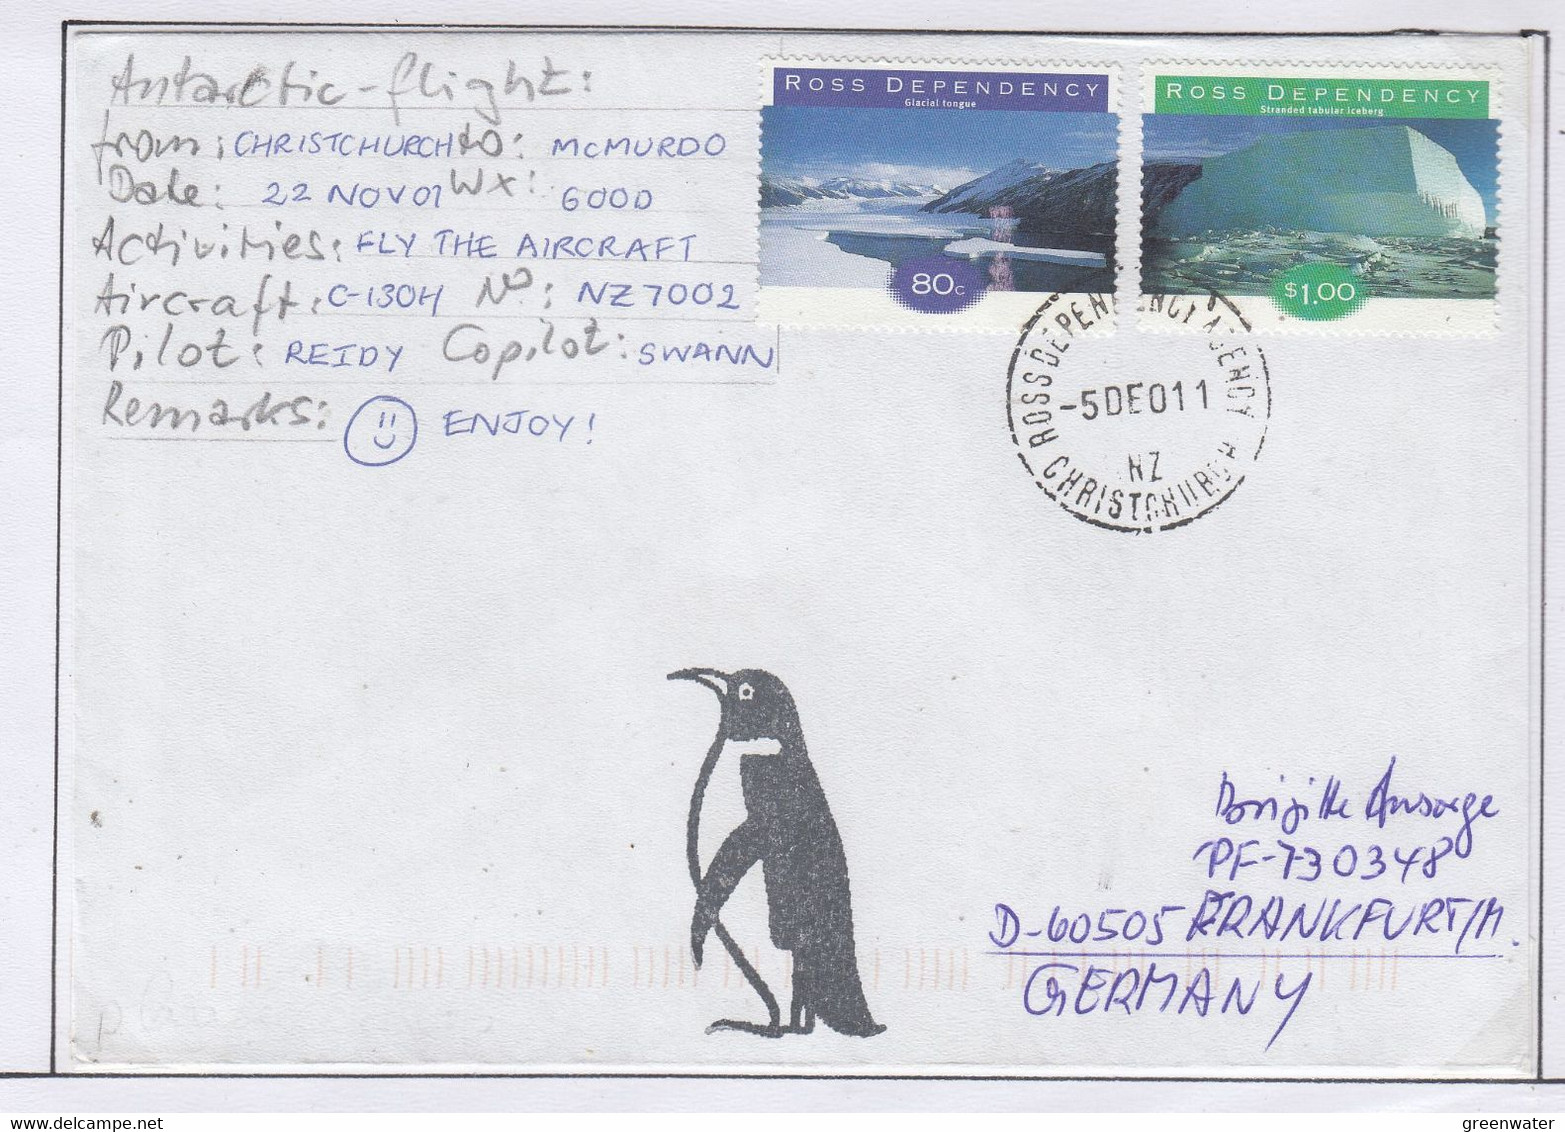 Ross Dependency Scott Base 2001 Antarctic Flight  Christchurch To McMurdo.22 NOV 01 Ca Ross 5 DE 2001 (AF167A) - Vuelos Polares